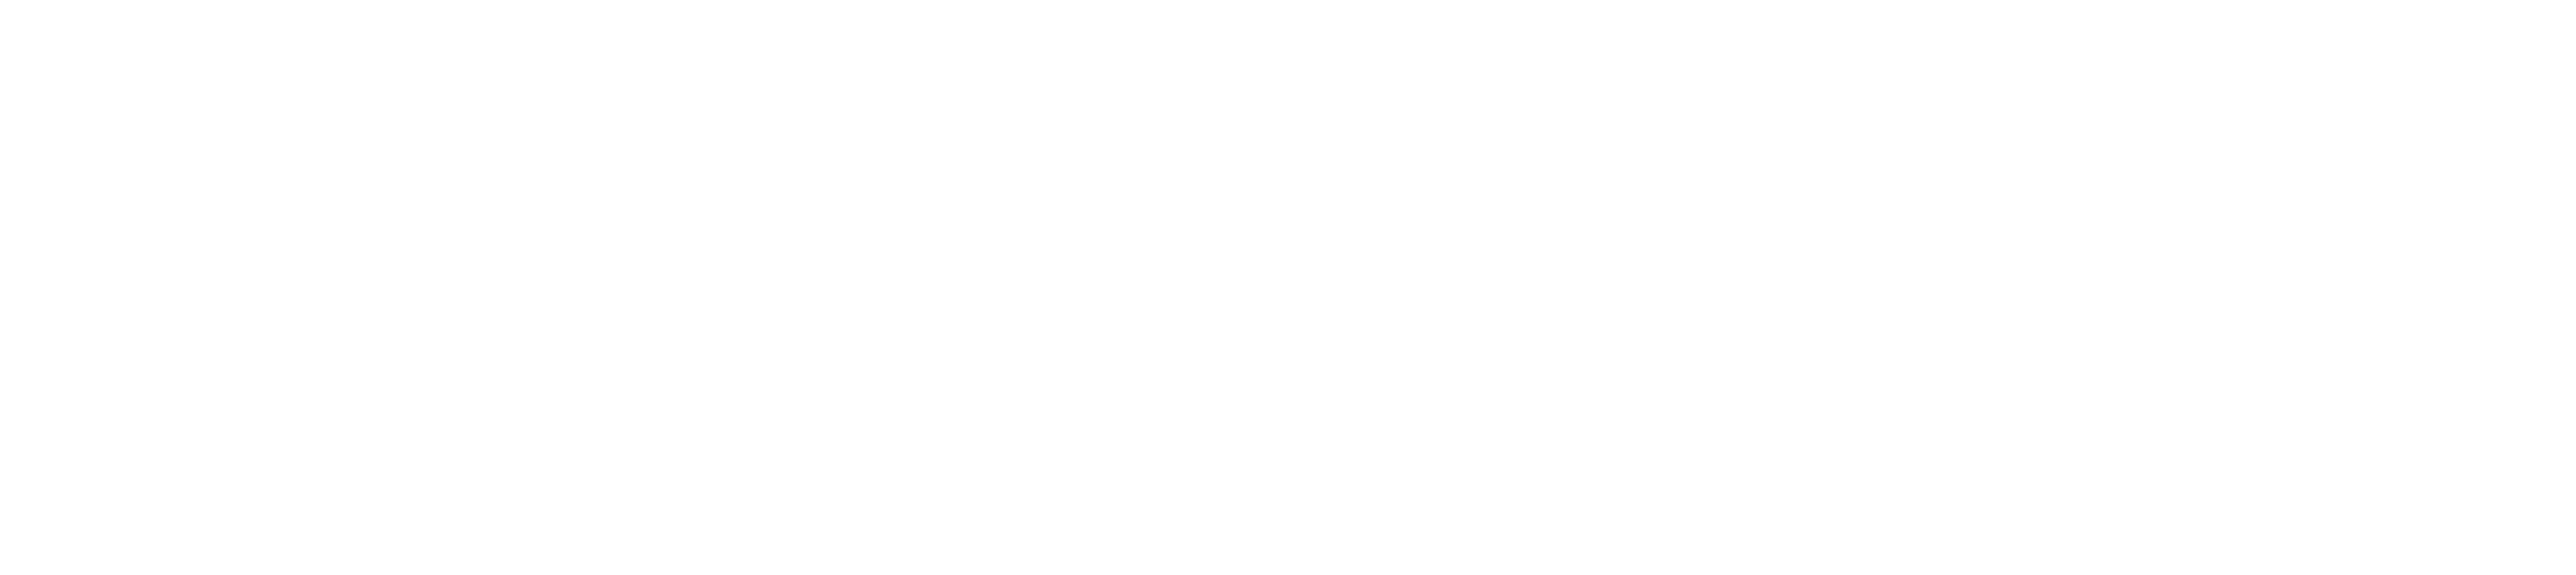 Trinity Logo Banner Wht Script